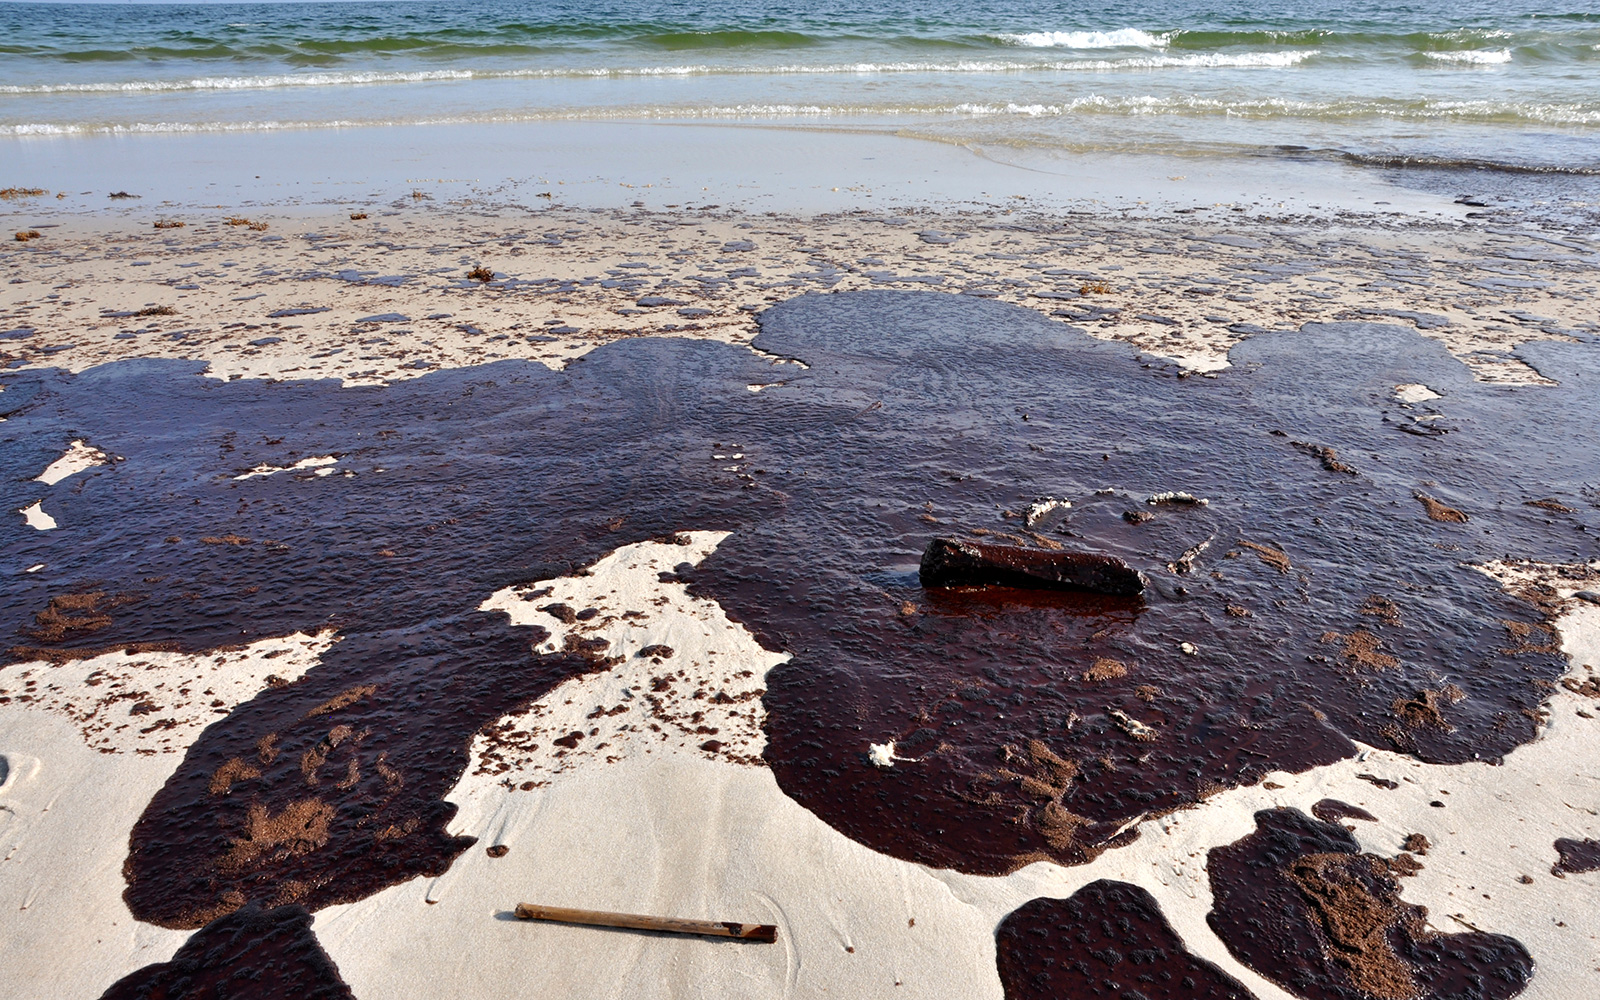 Heavily oiled beach along the Gulf Coast